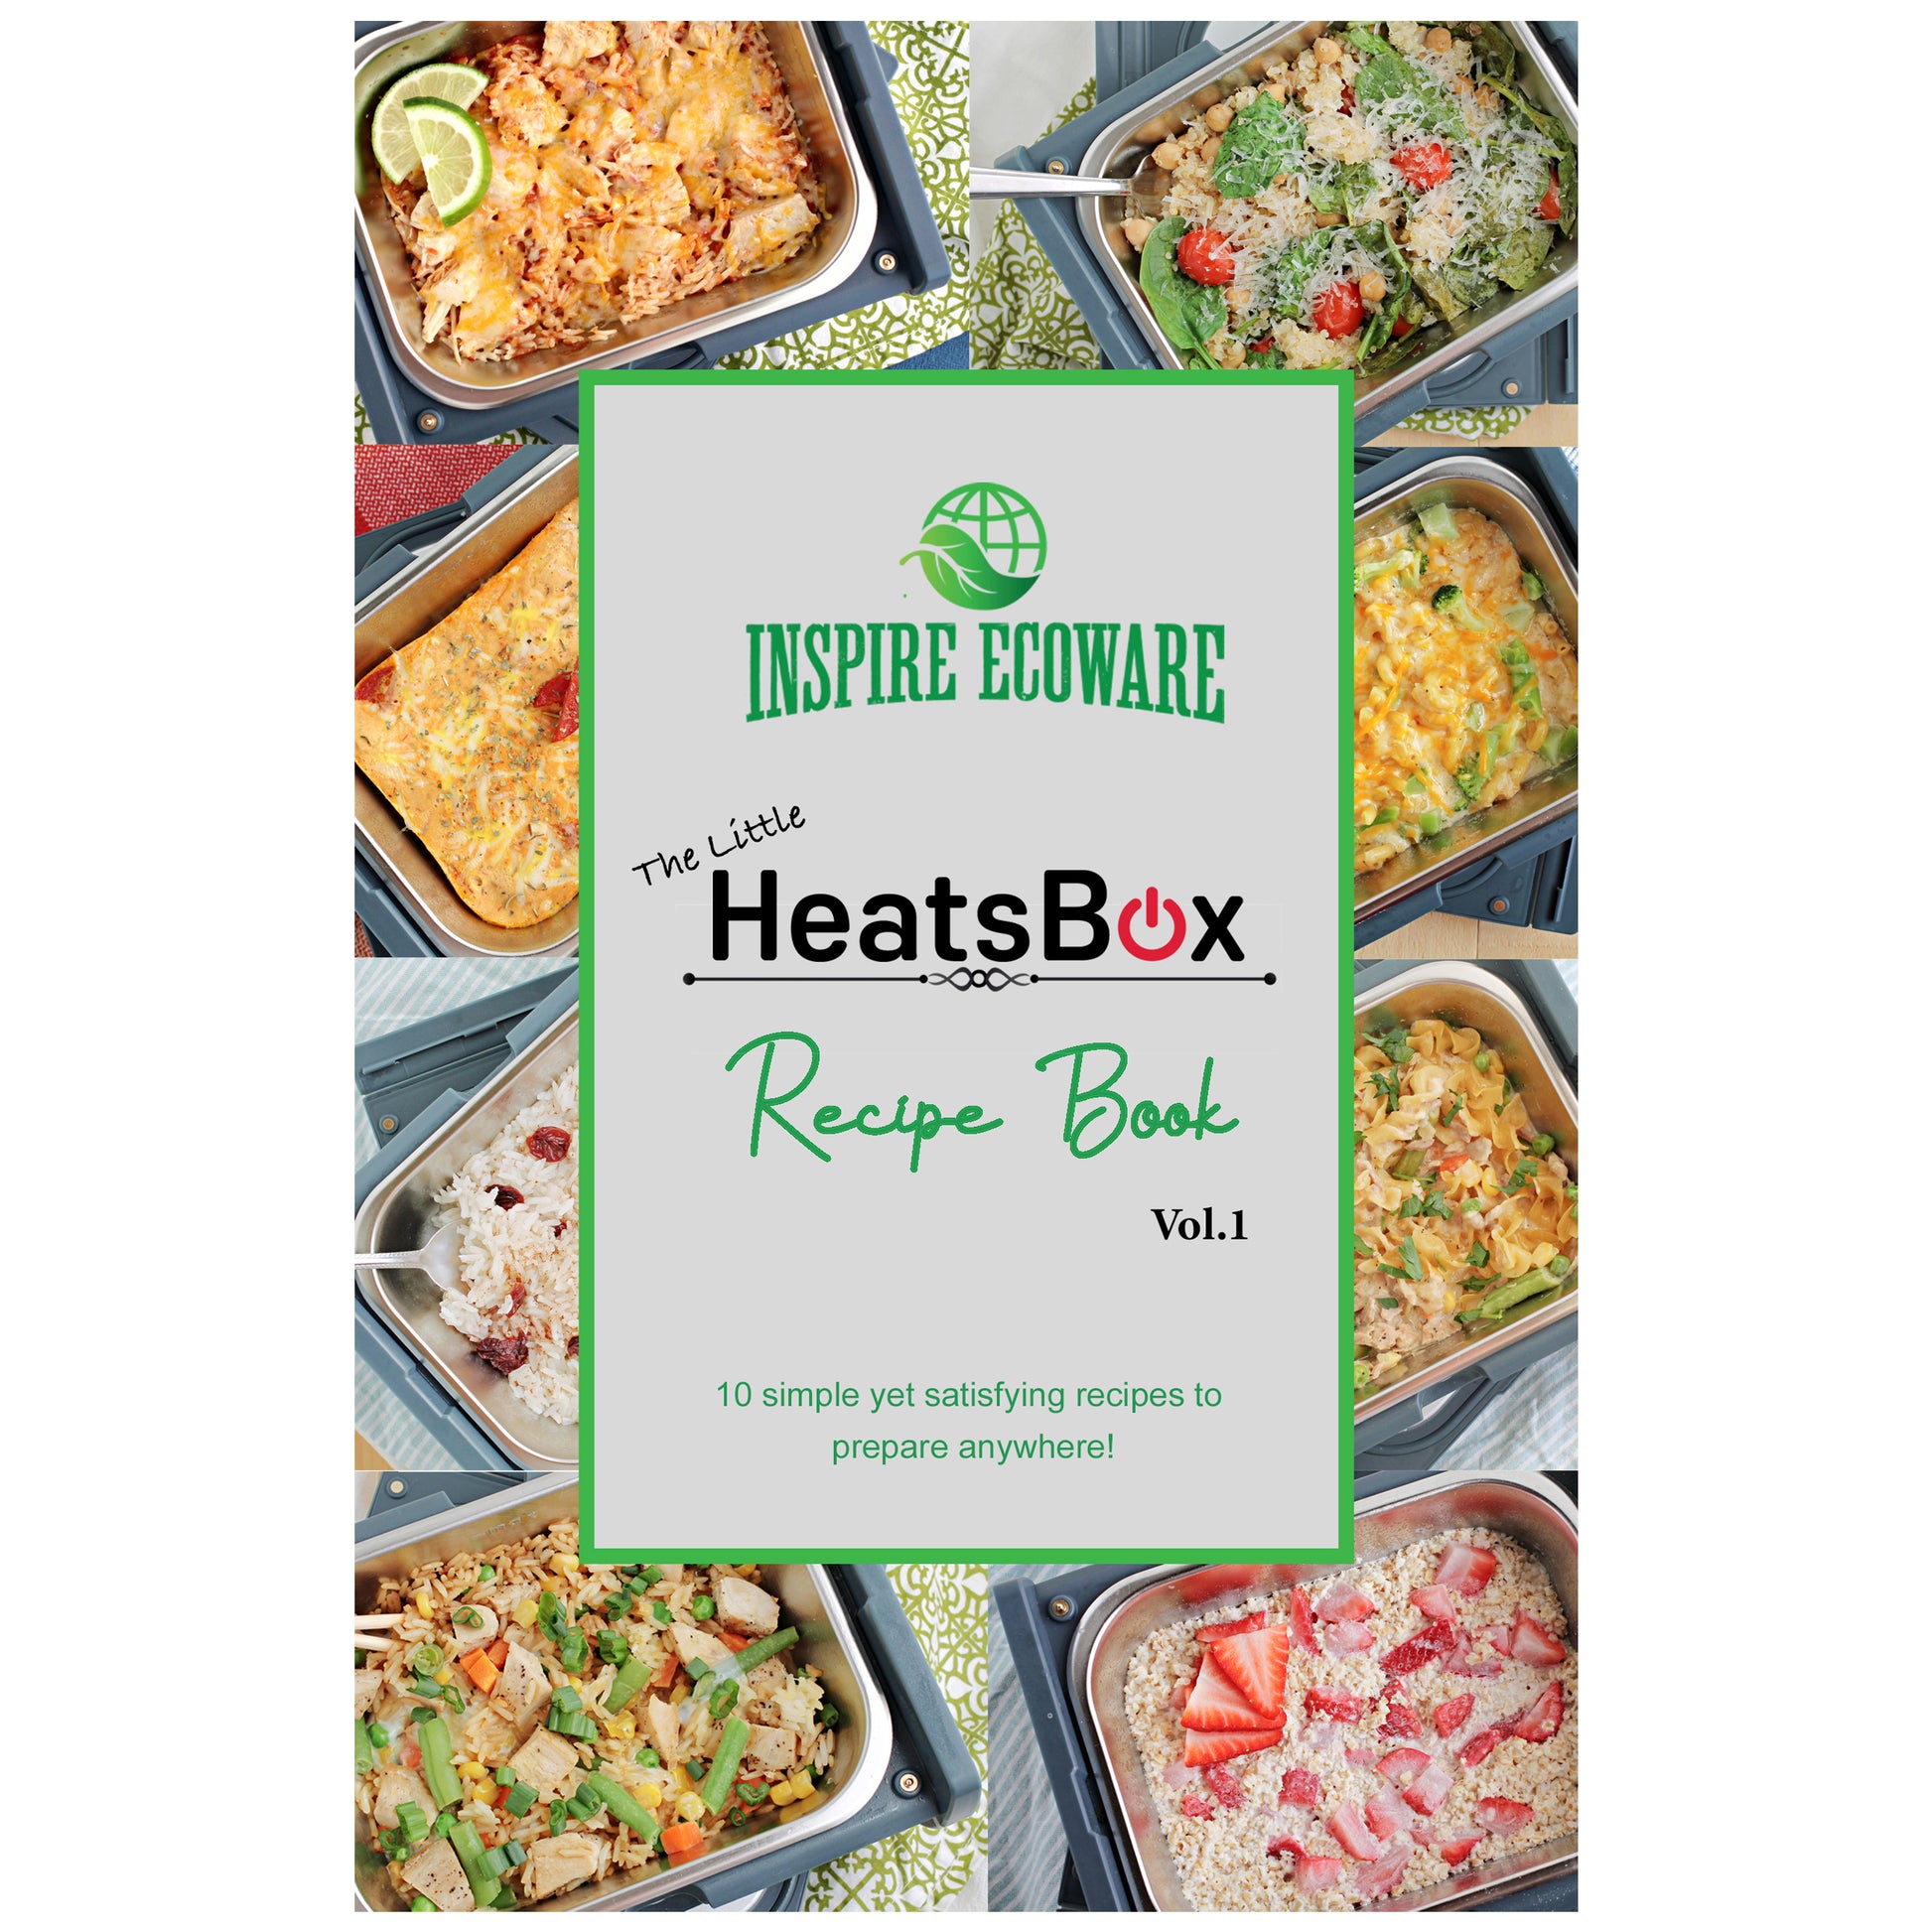 HeatsBox - Appareils de cuisine divers